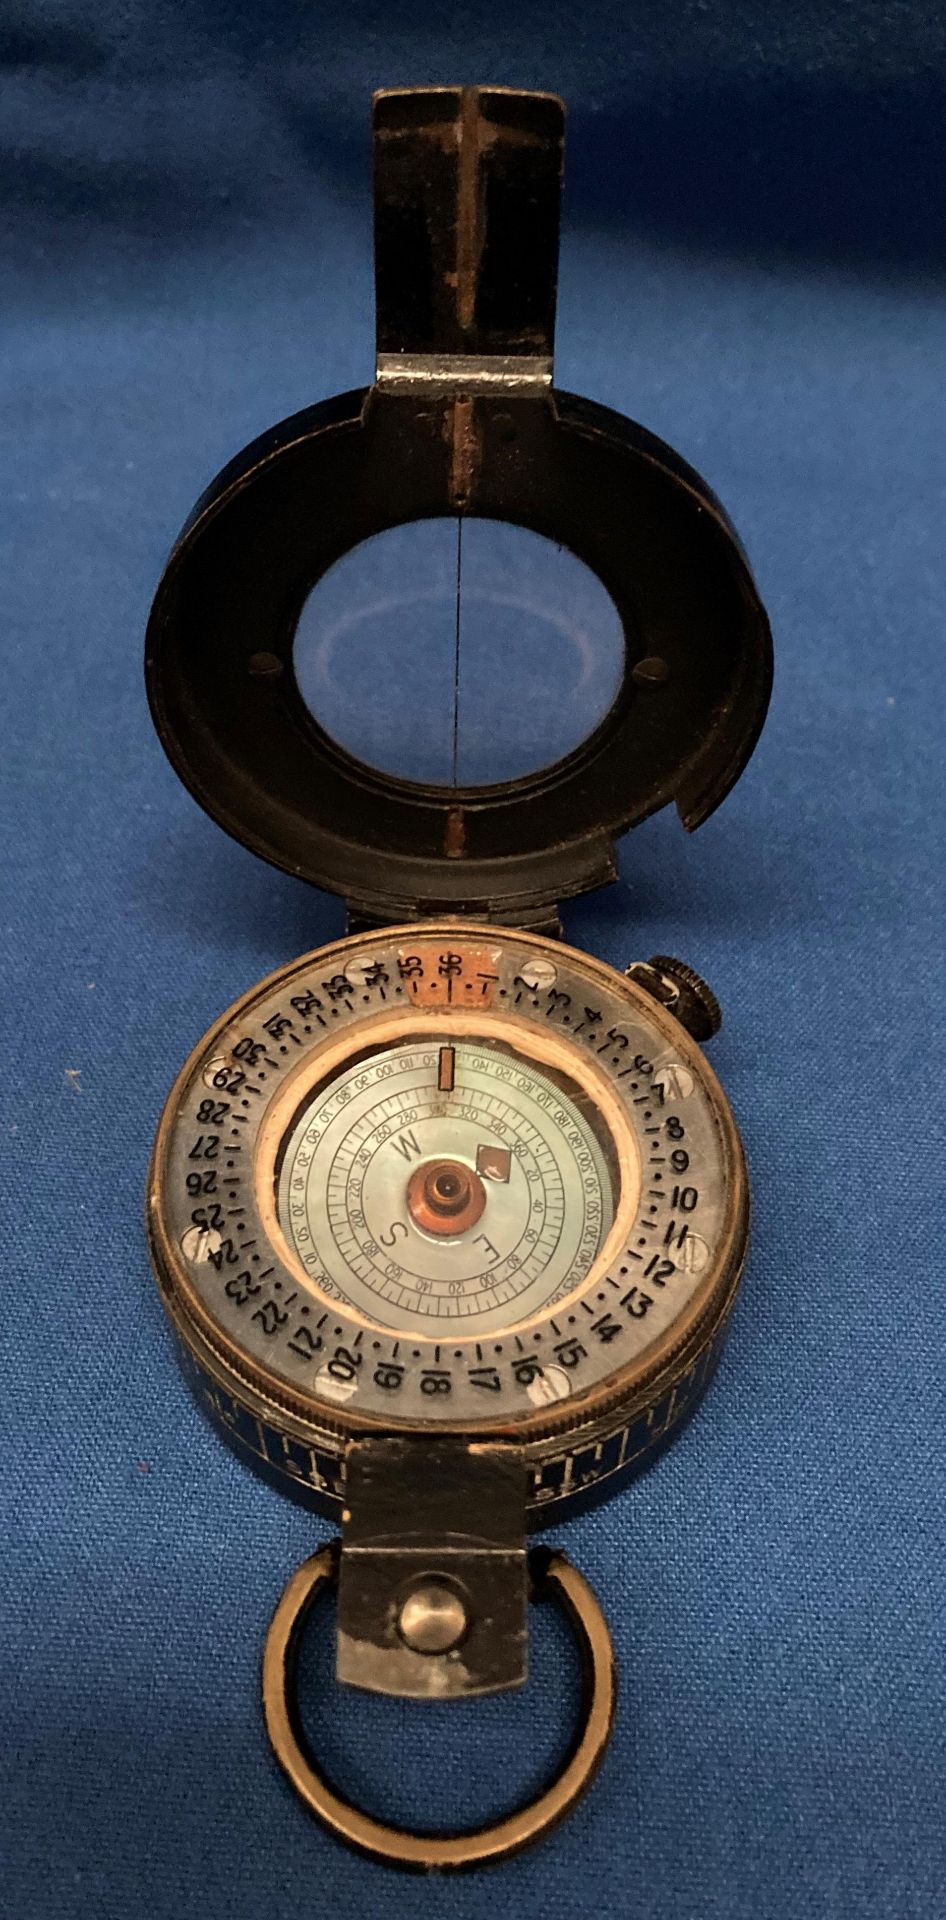 ATG Co Ltd London 1940 Mark III metal and brass naval compass no.